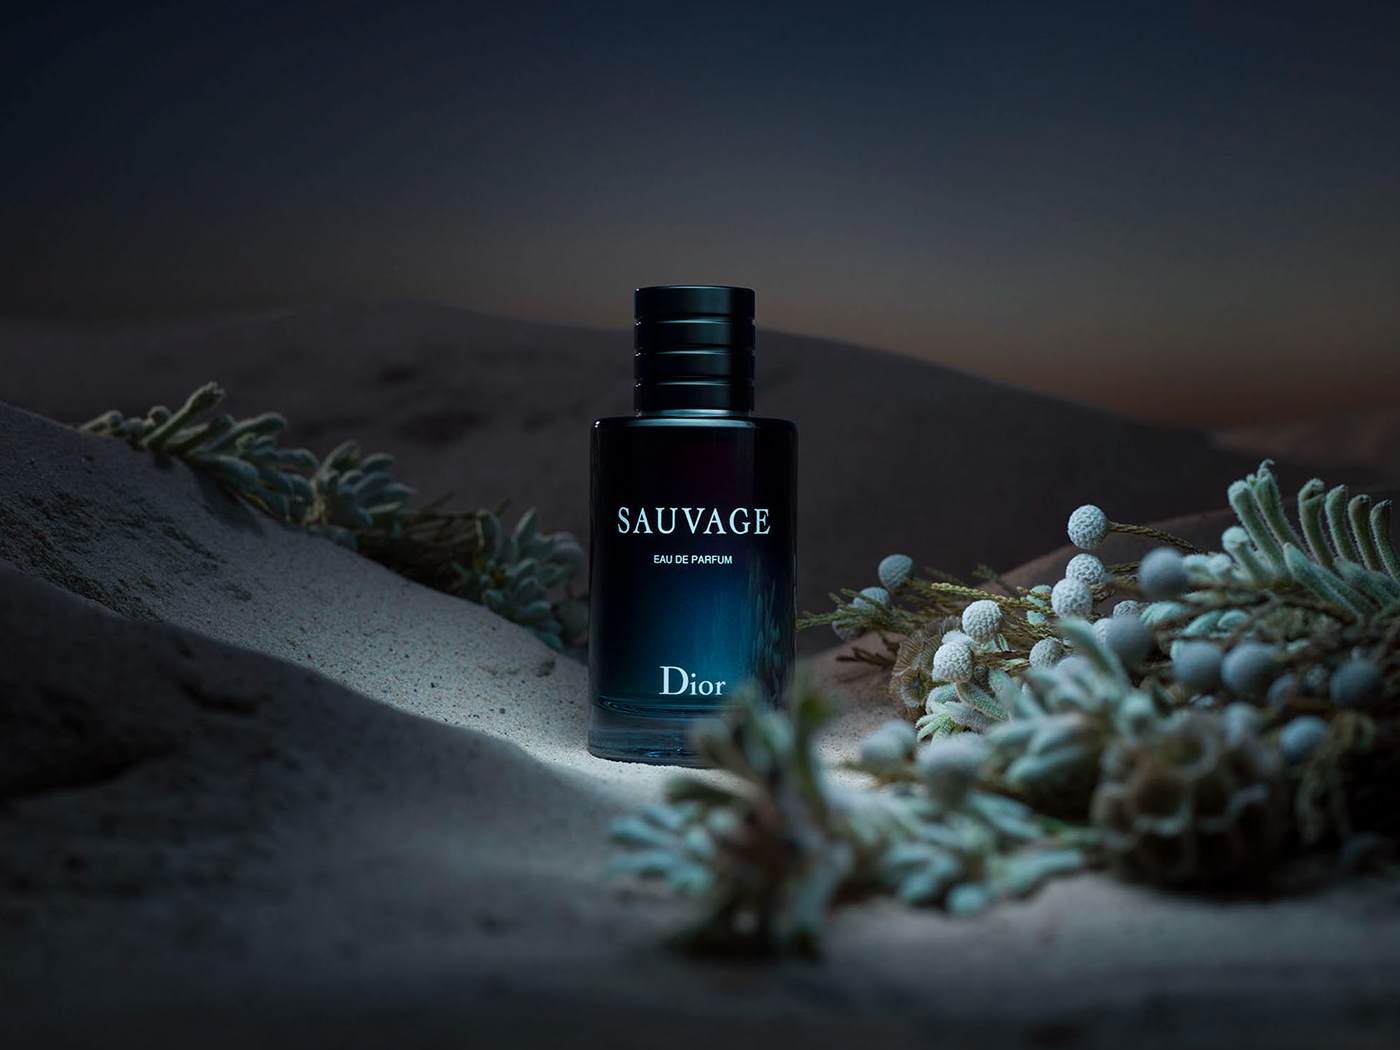 Dior perfume product editorial Landscape still life desert Jonathan Knowles